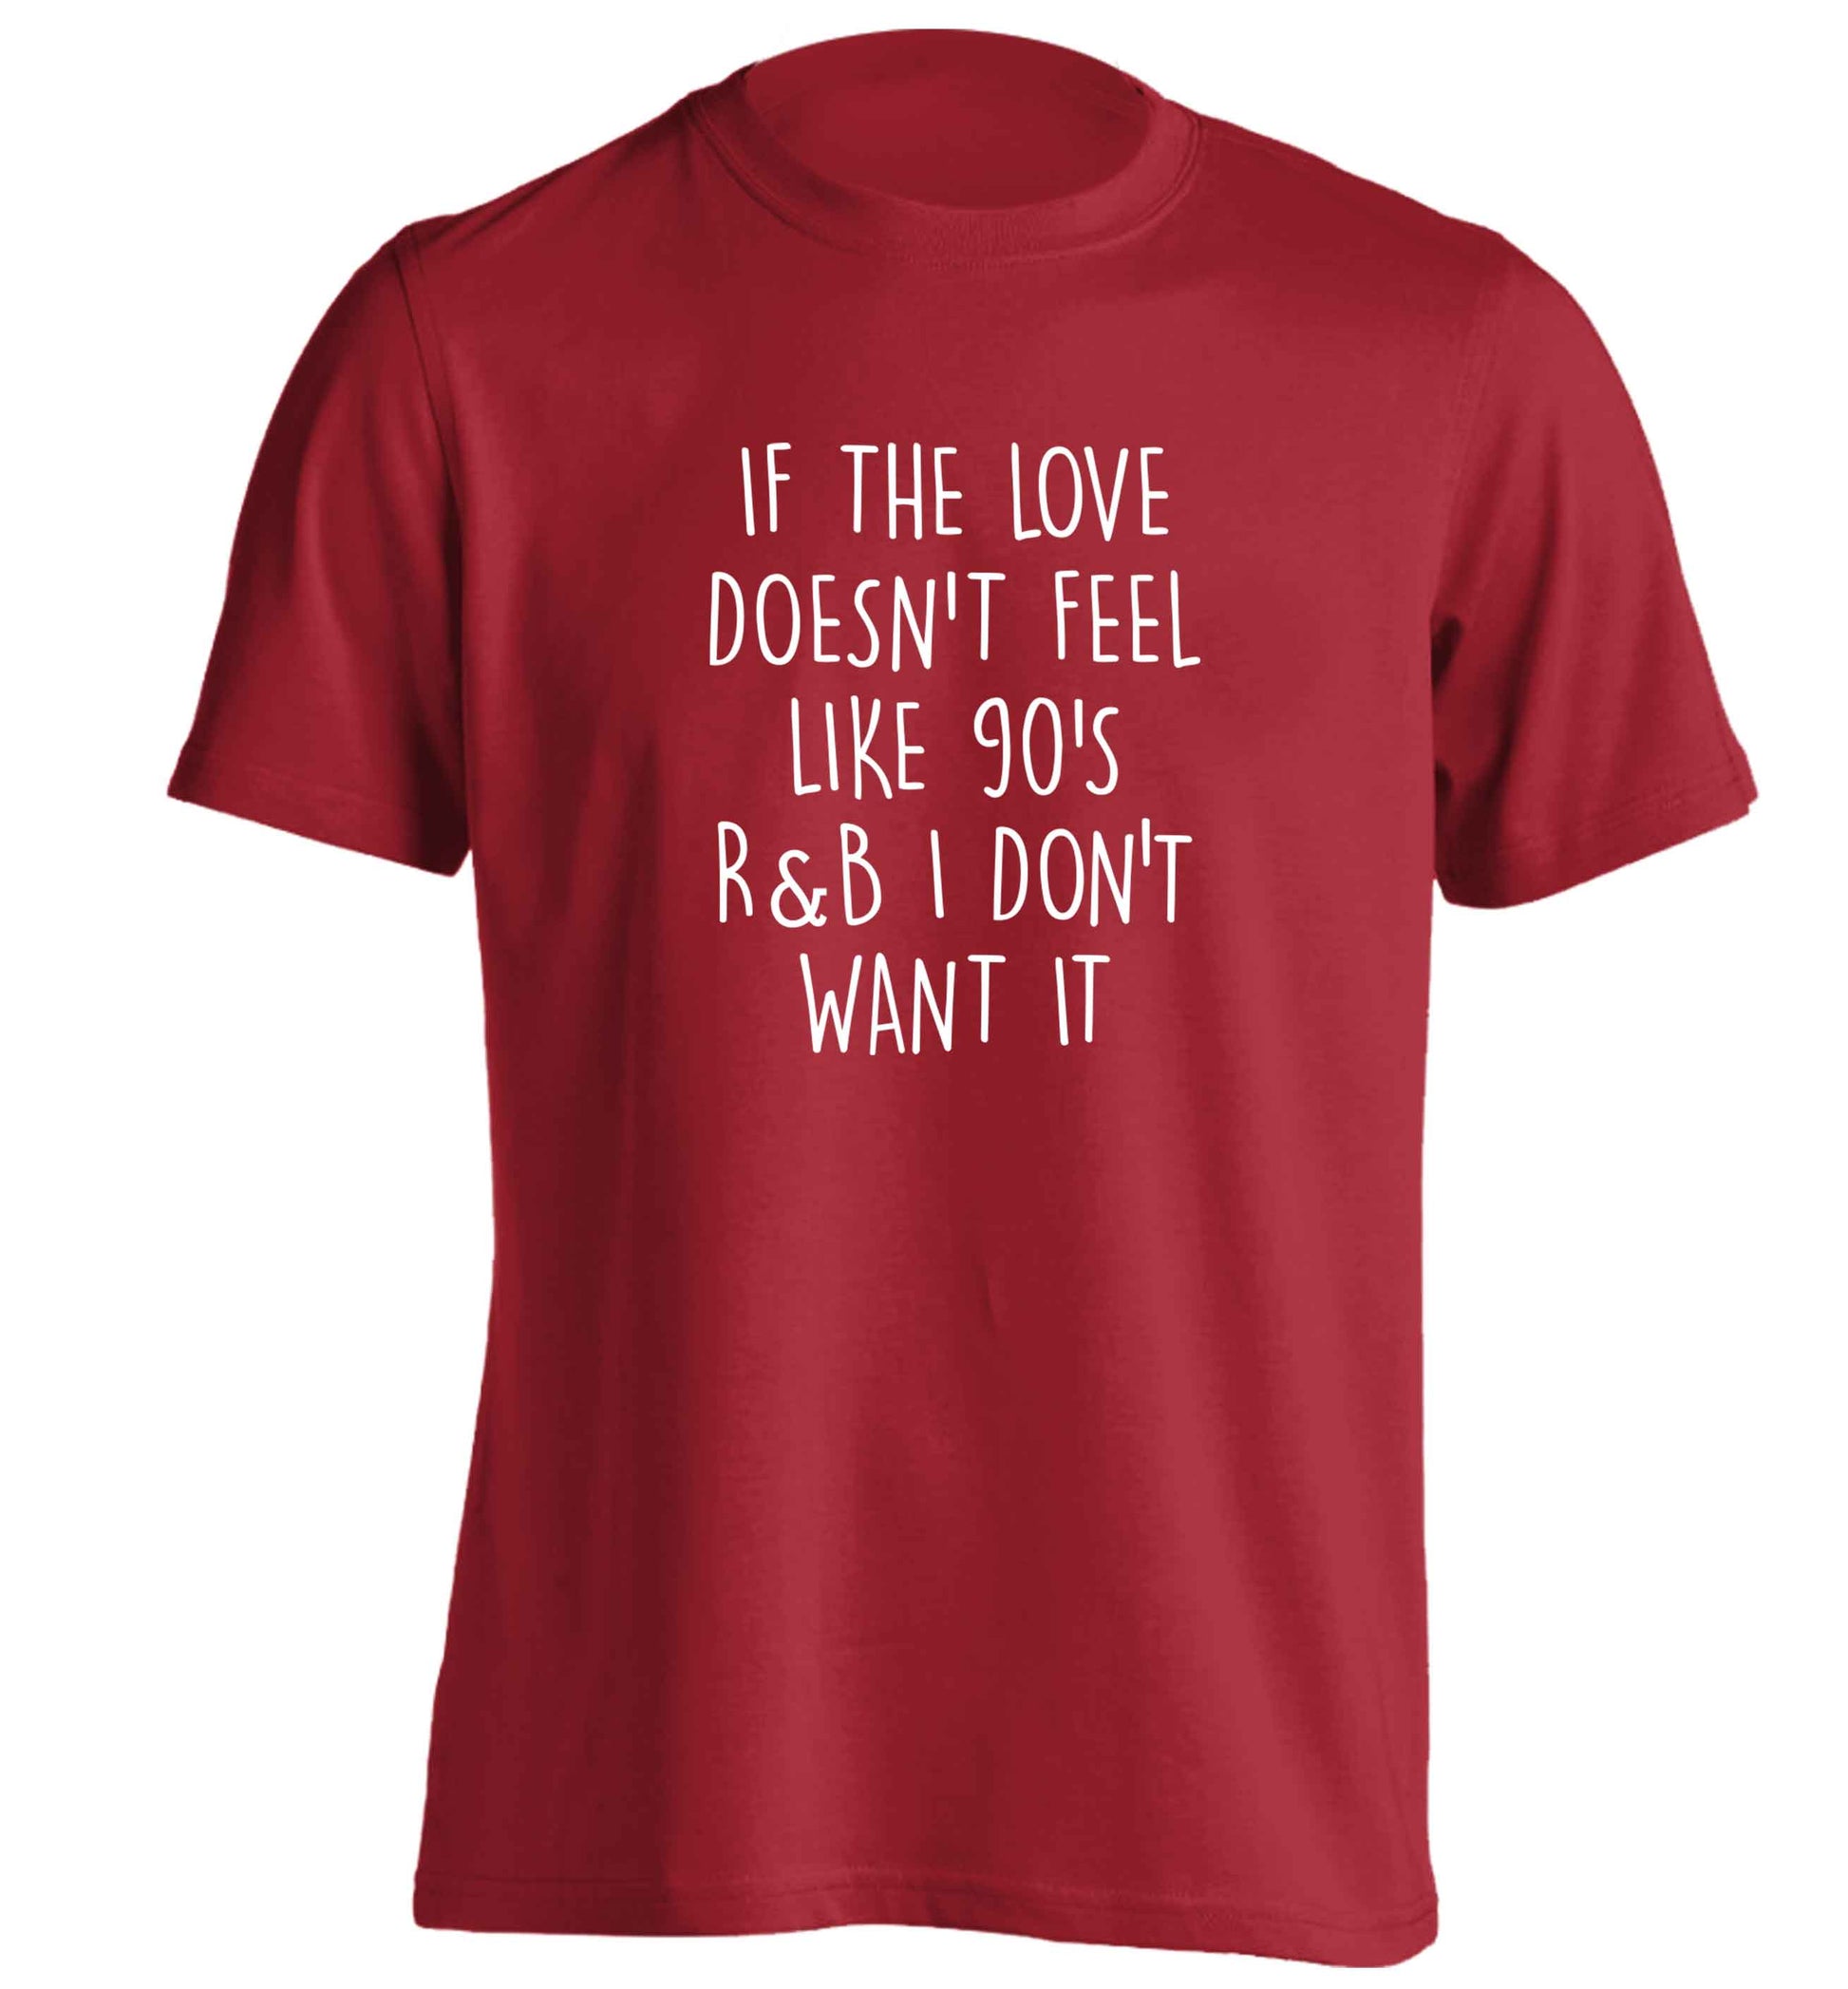 If the love doesn't feel like 90's r&b I don't want it adults unisex red Tshirt 2XL